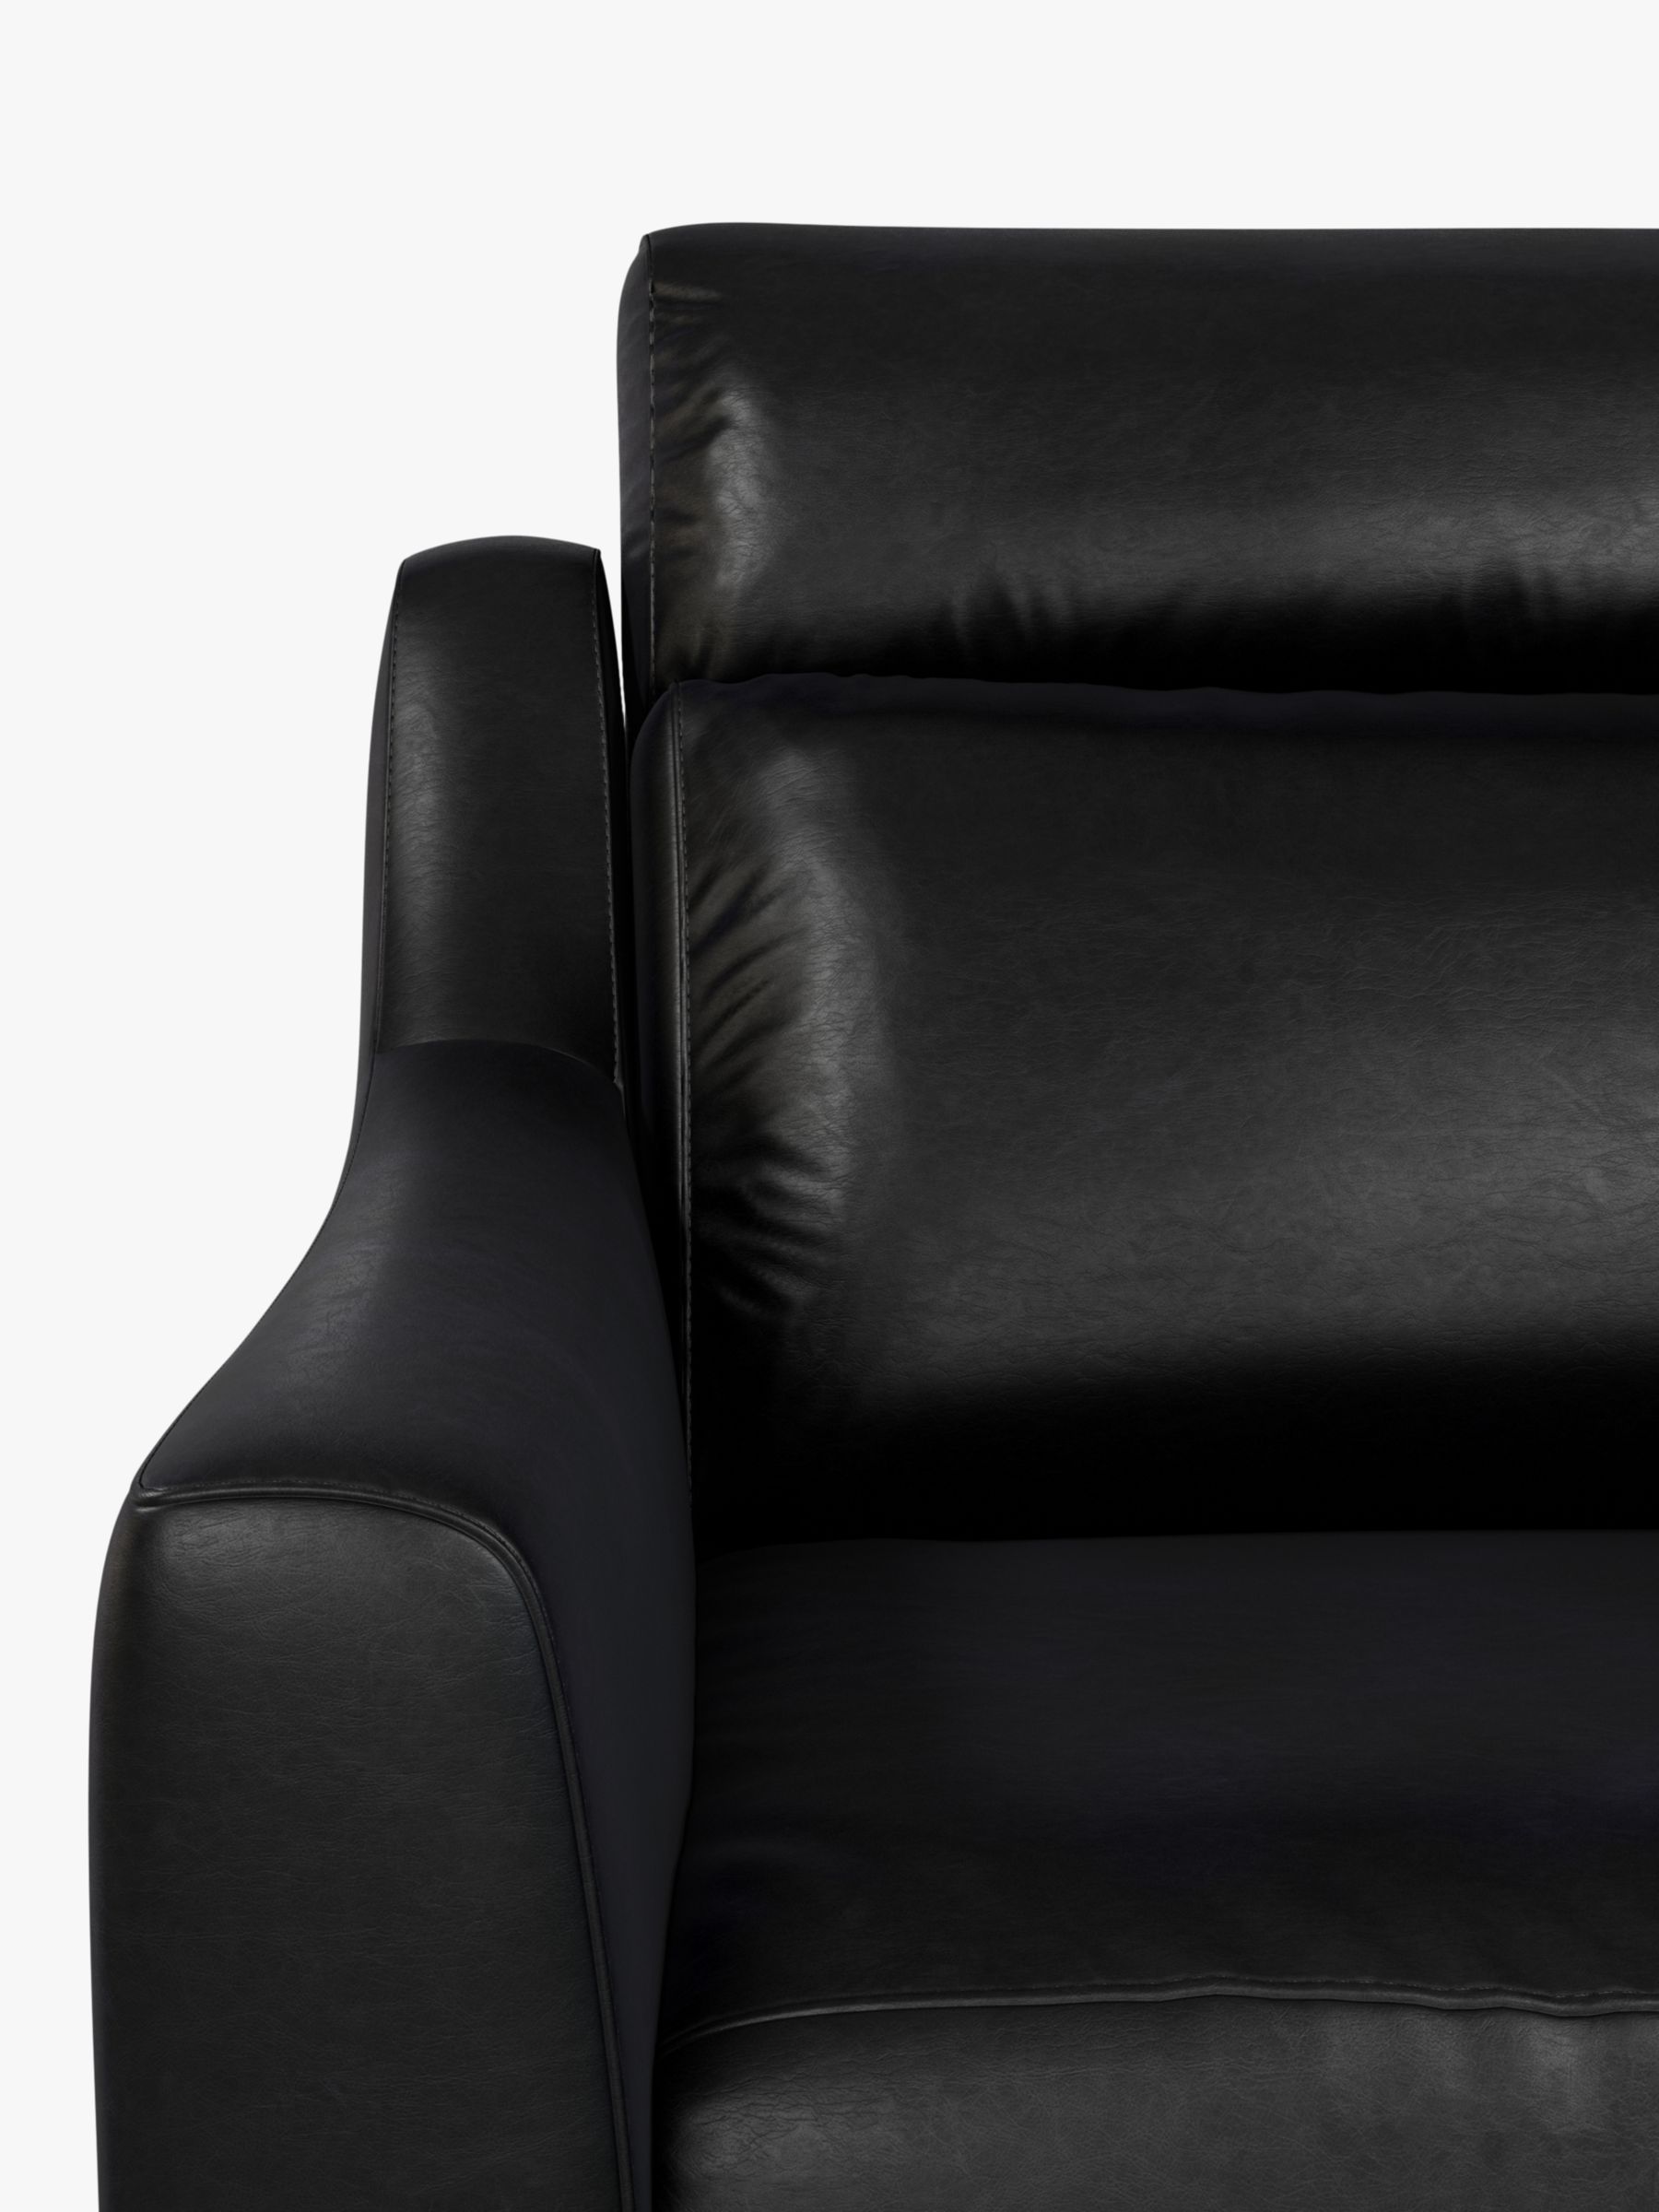 John Lewis Elevate Large 2 Seater Power Recliner Leather Sofa, Metal Leg